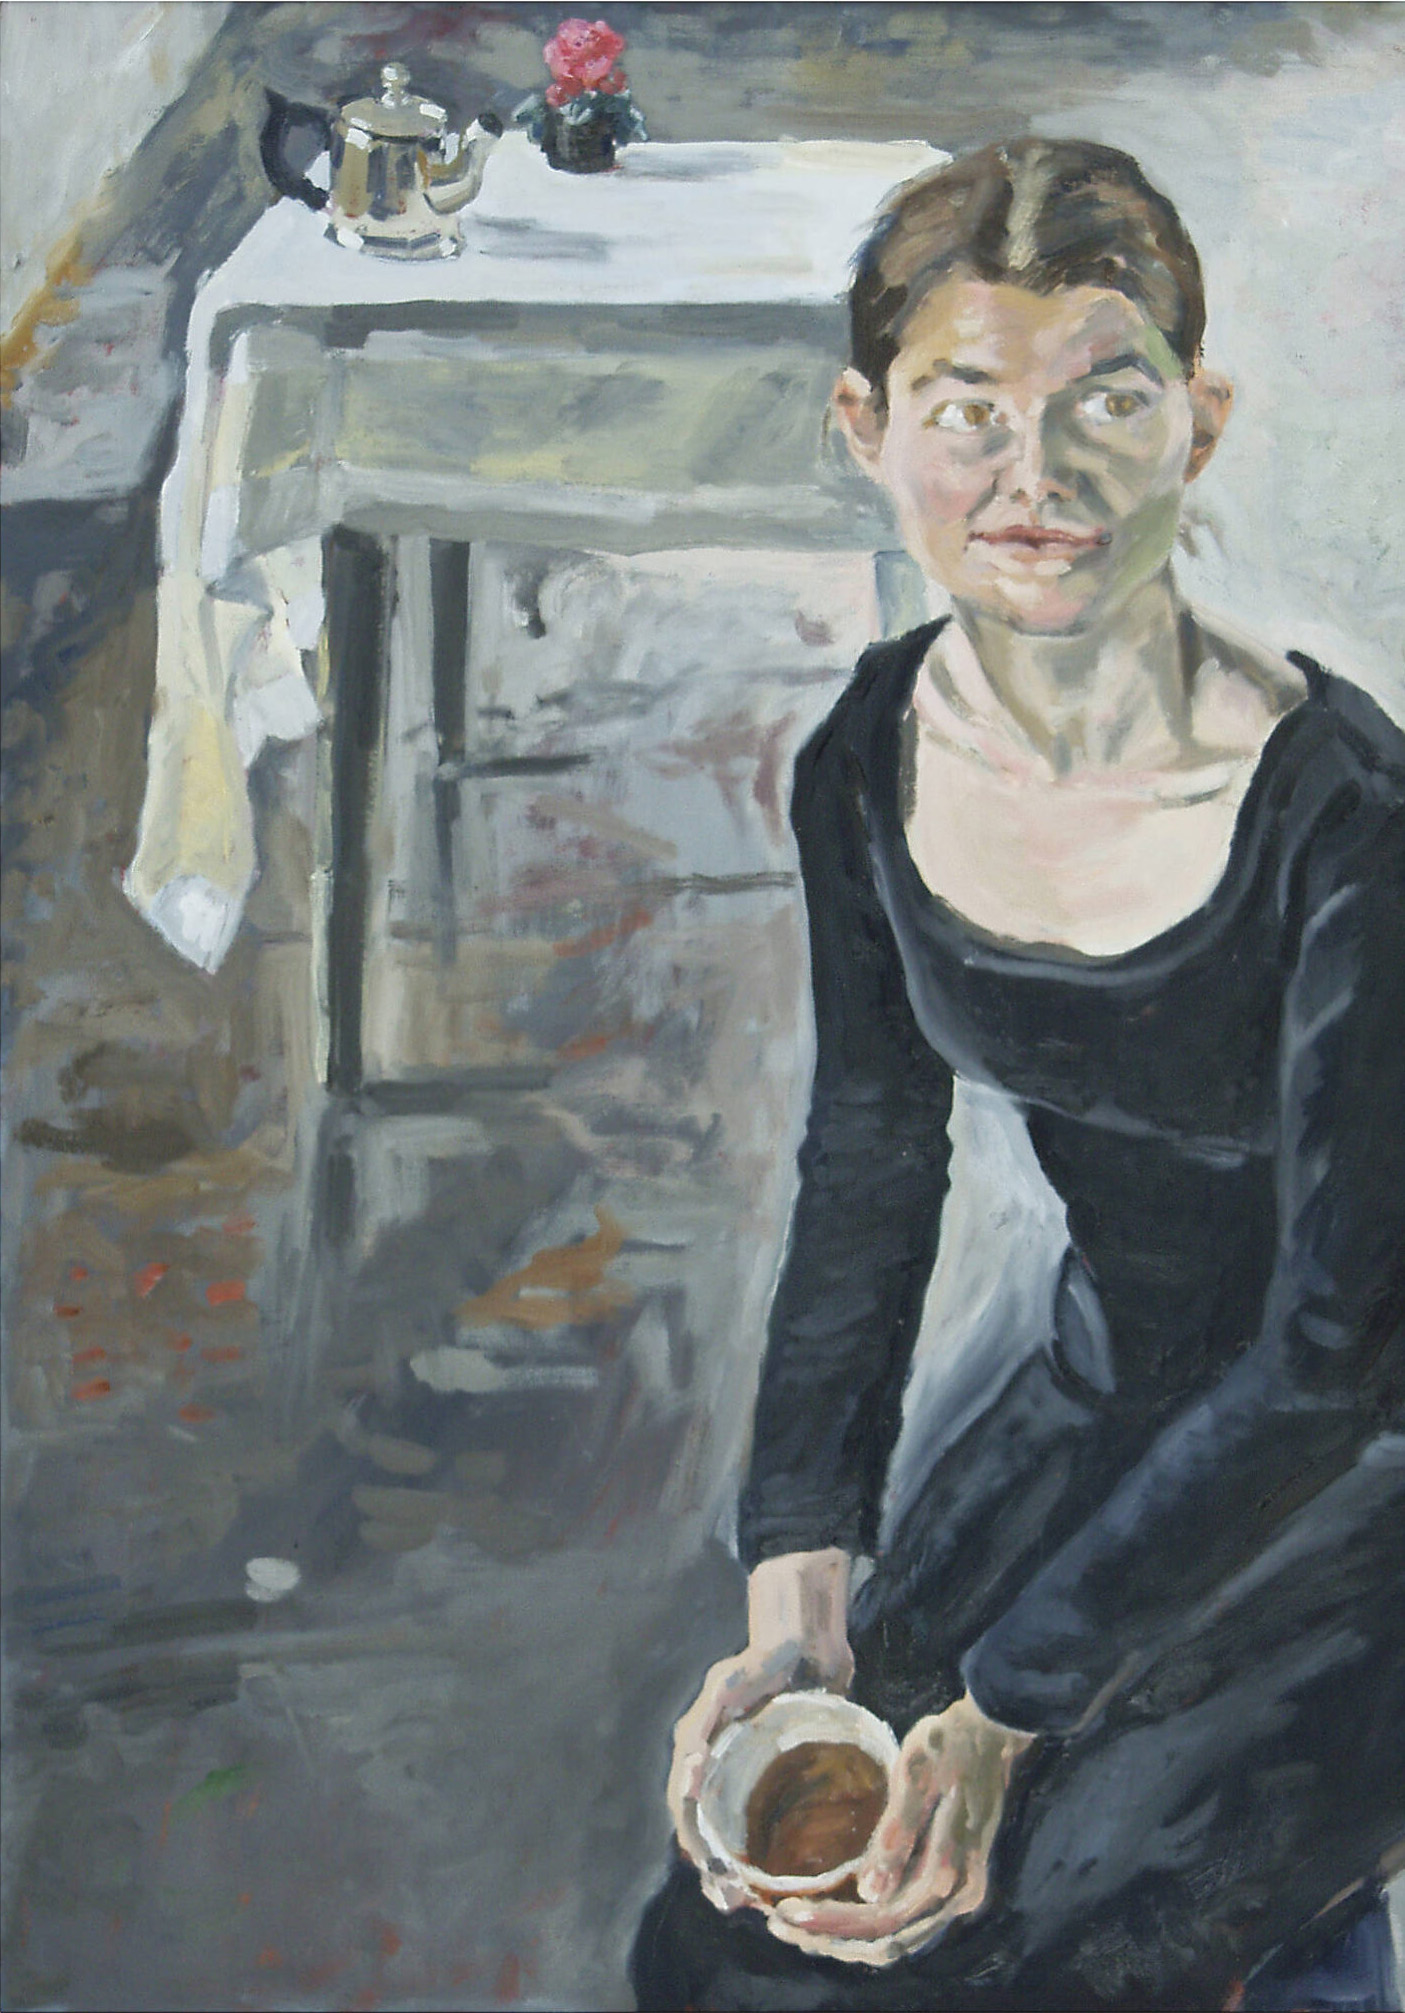 Helen im Atelier, 80x60, 2002